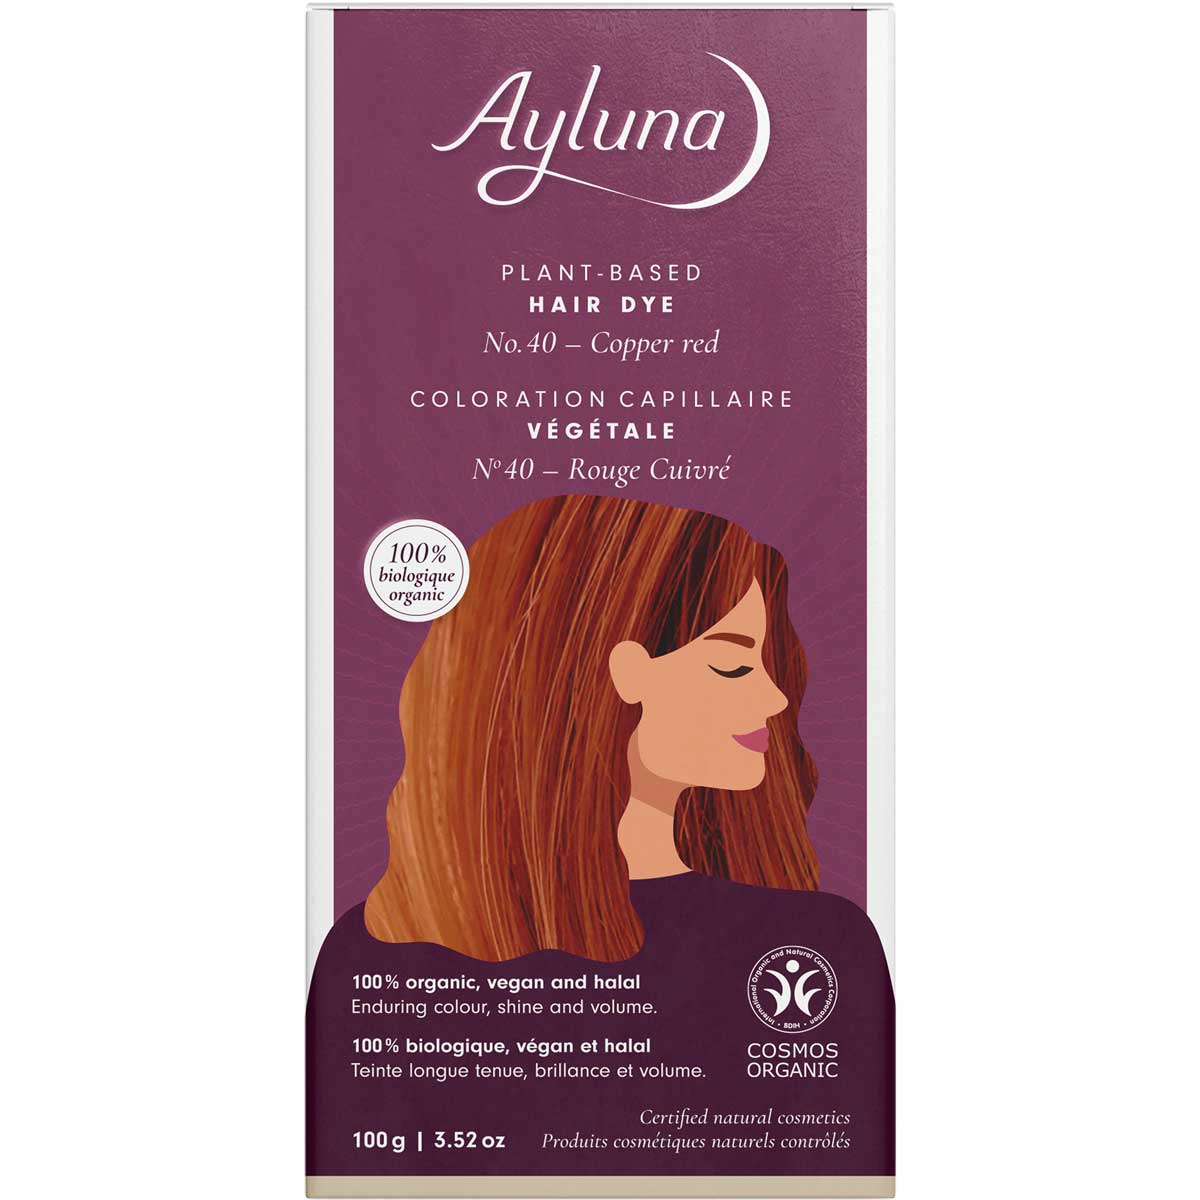 Ayluna Copper Red No.40 Plant-Based Hair Dye 100g